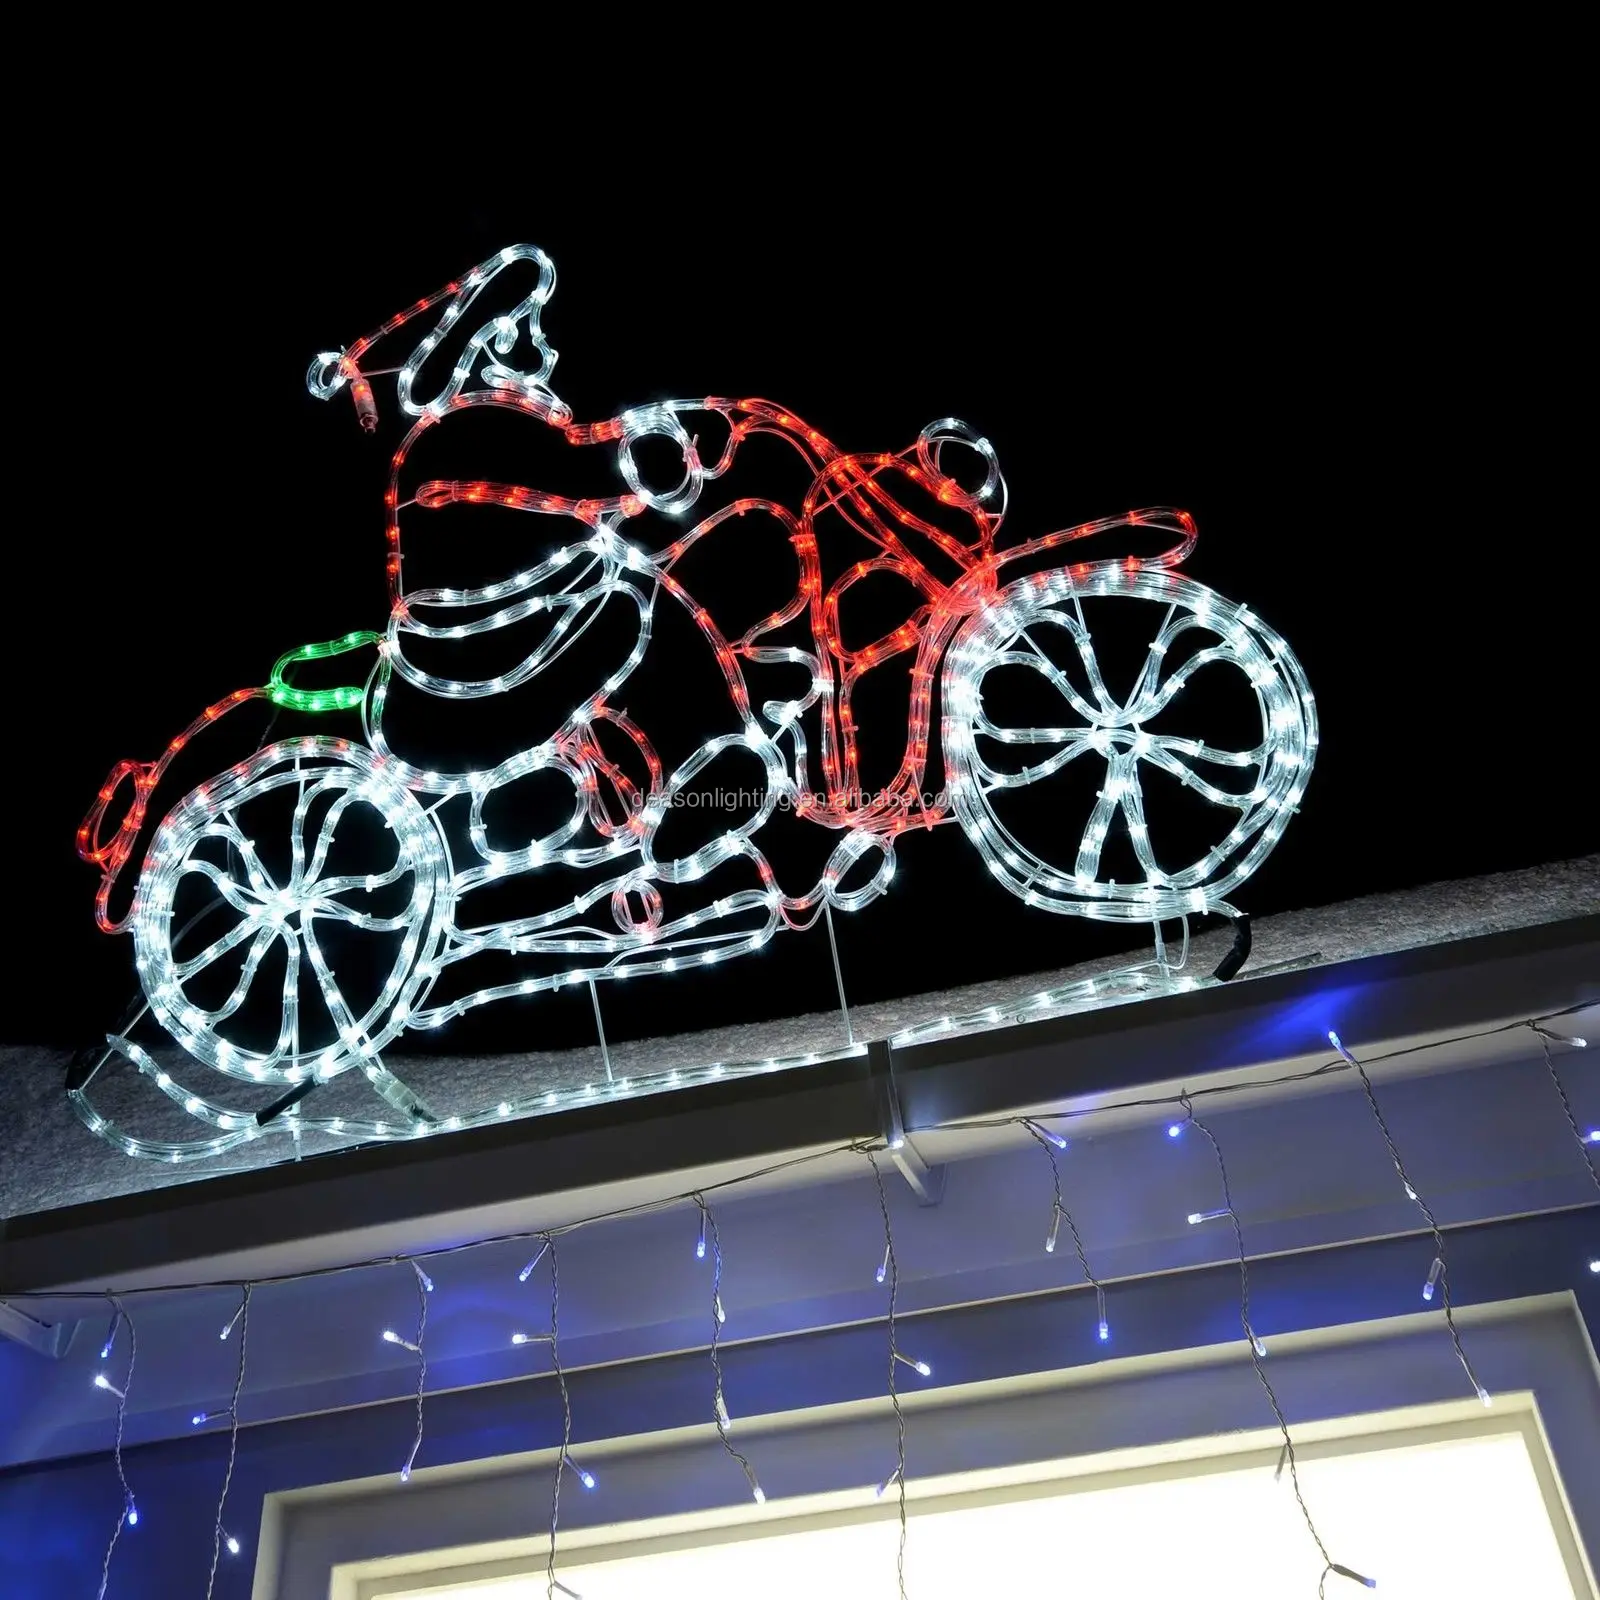 Santa Motorbike Lights - Buy Santa Claus Motif Rope Light,Motorcycle ...